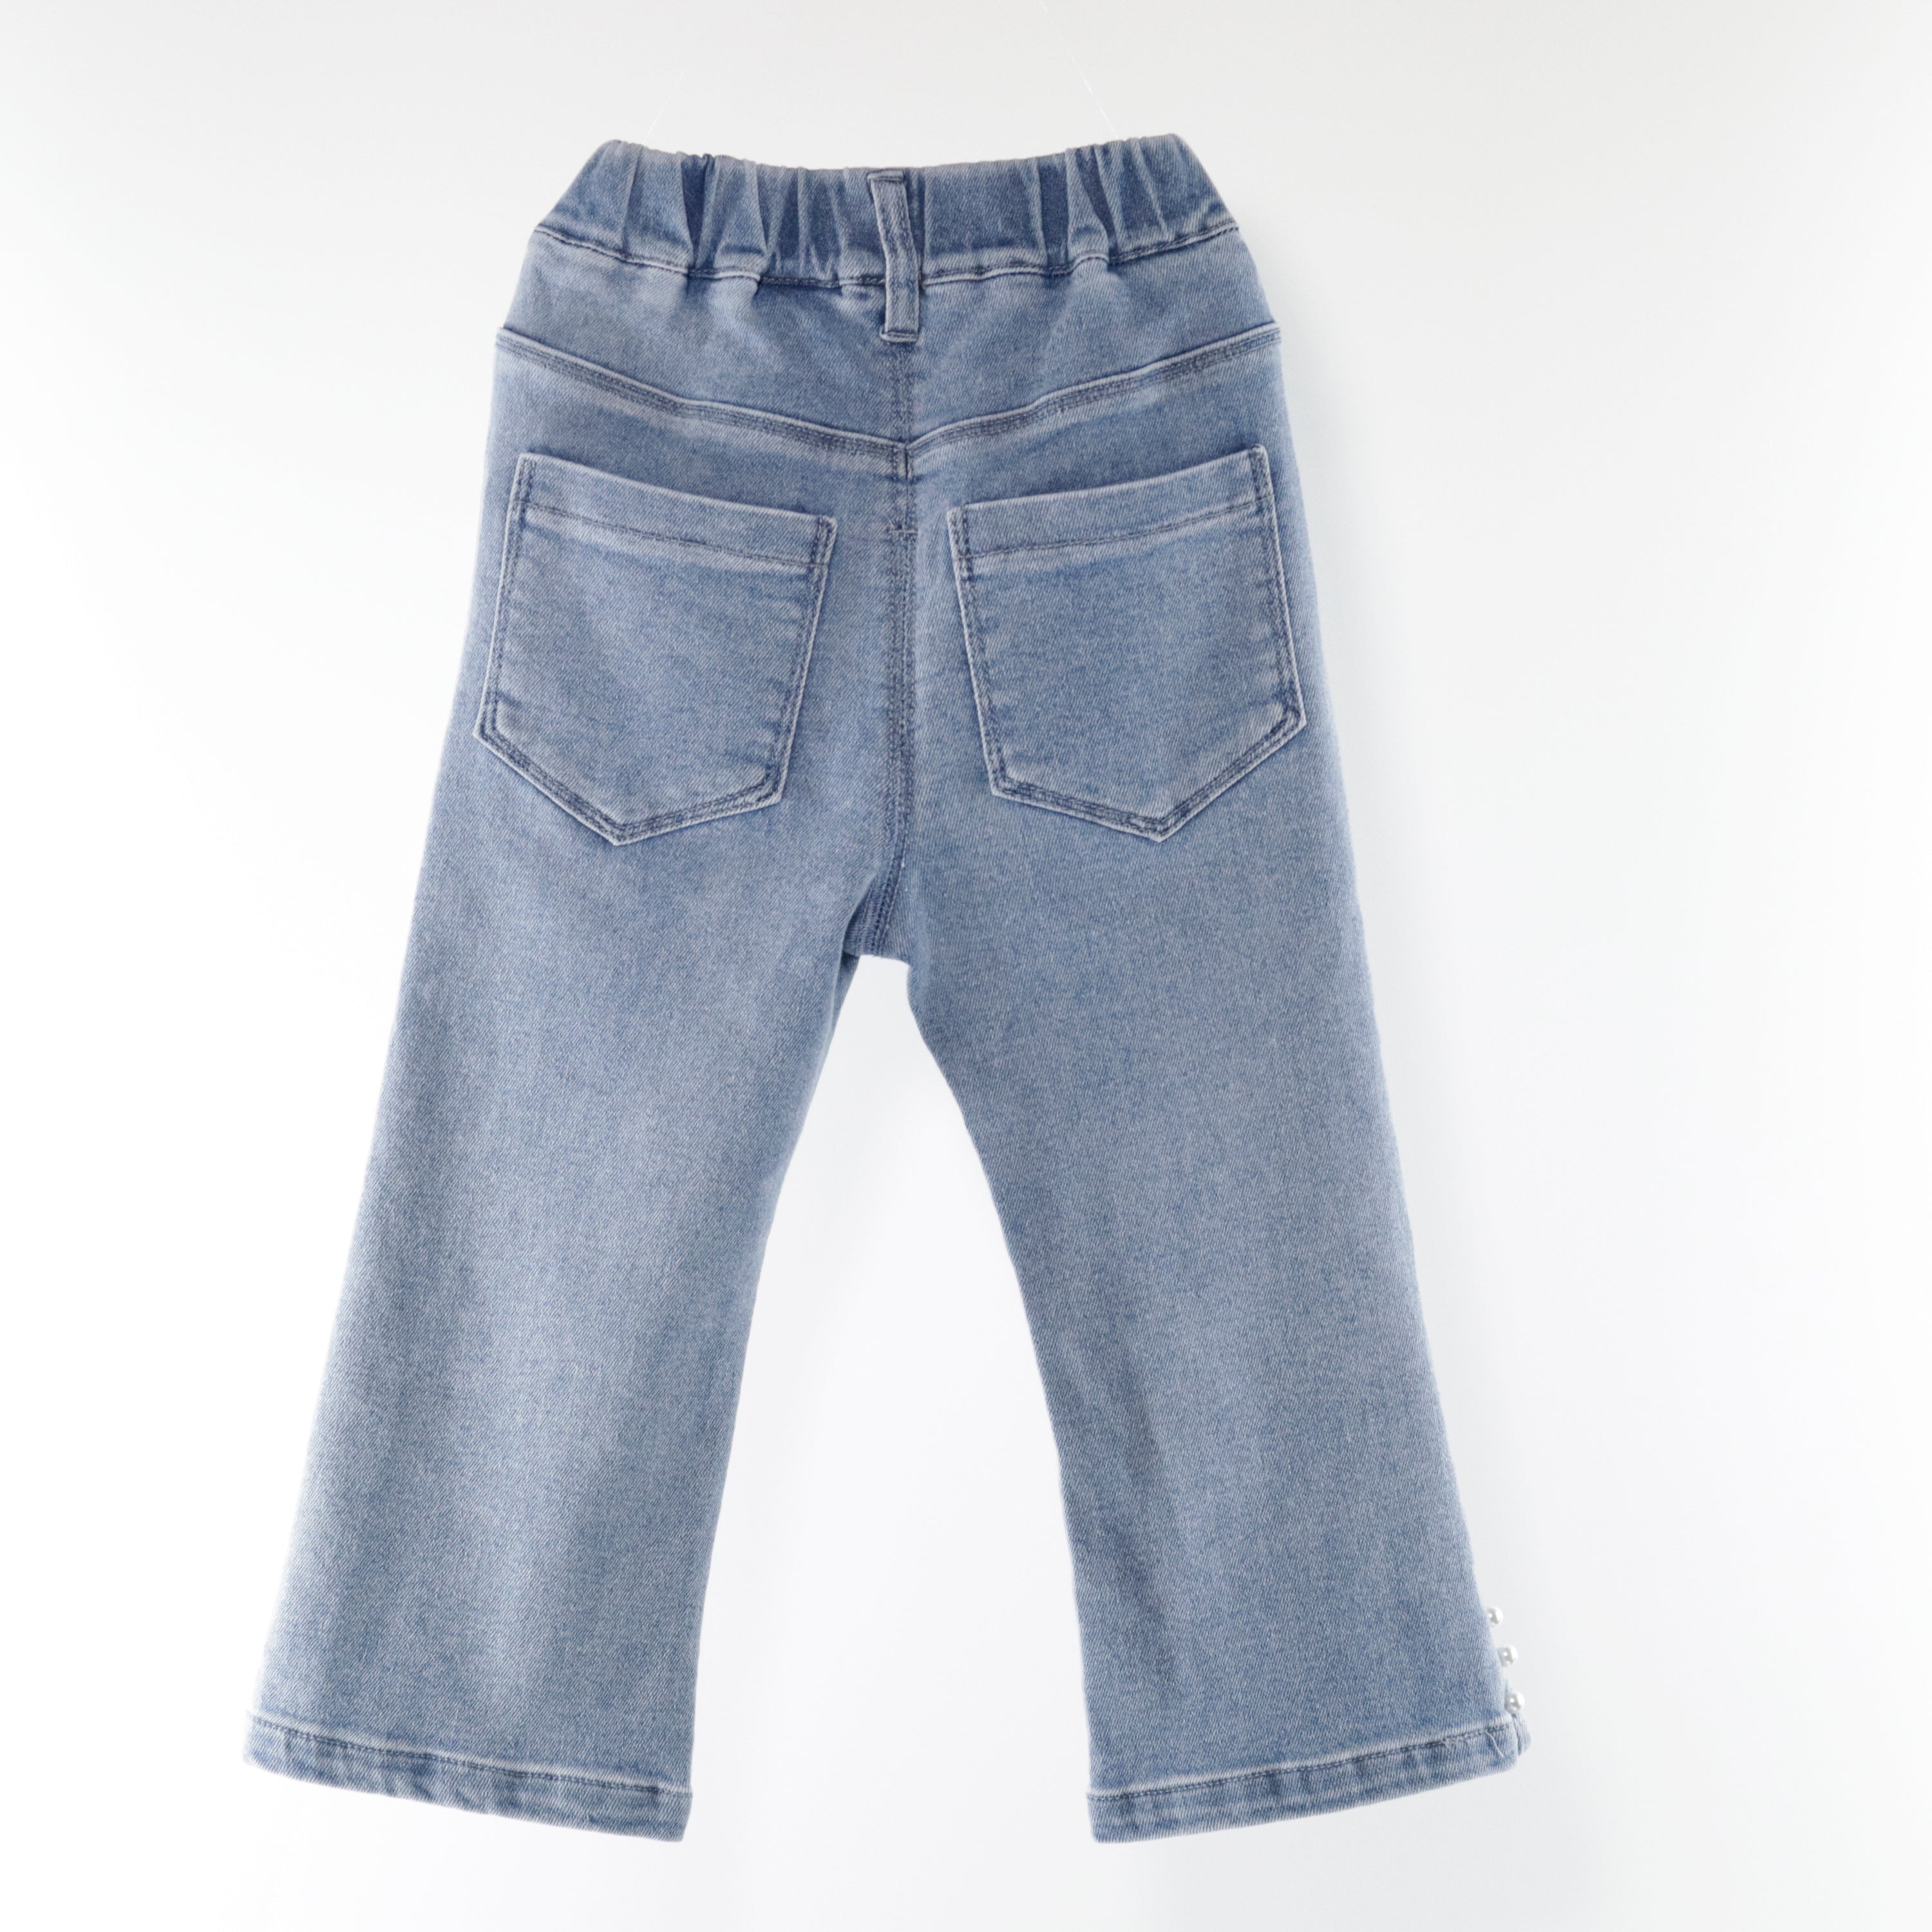 PH Flared Denim Jeans (Ready Stock)